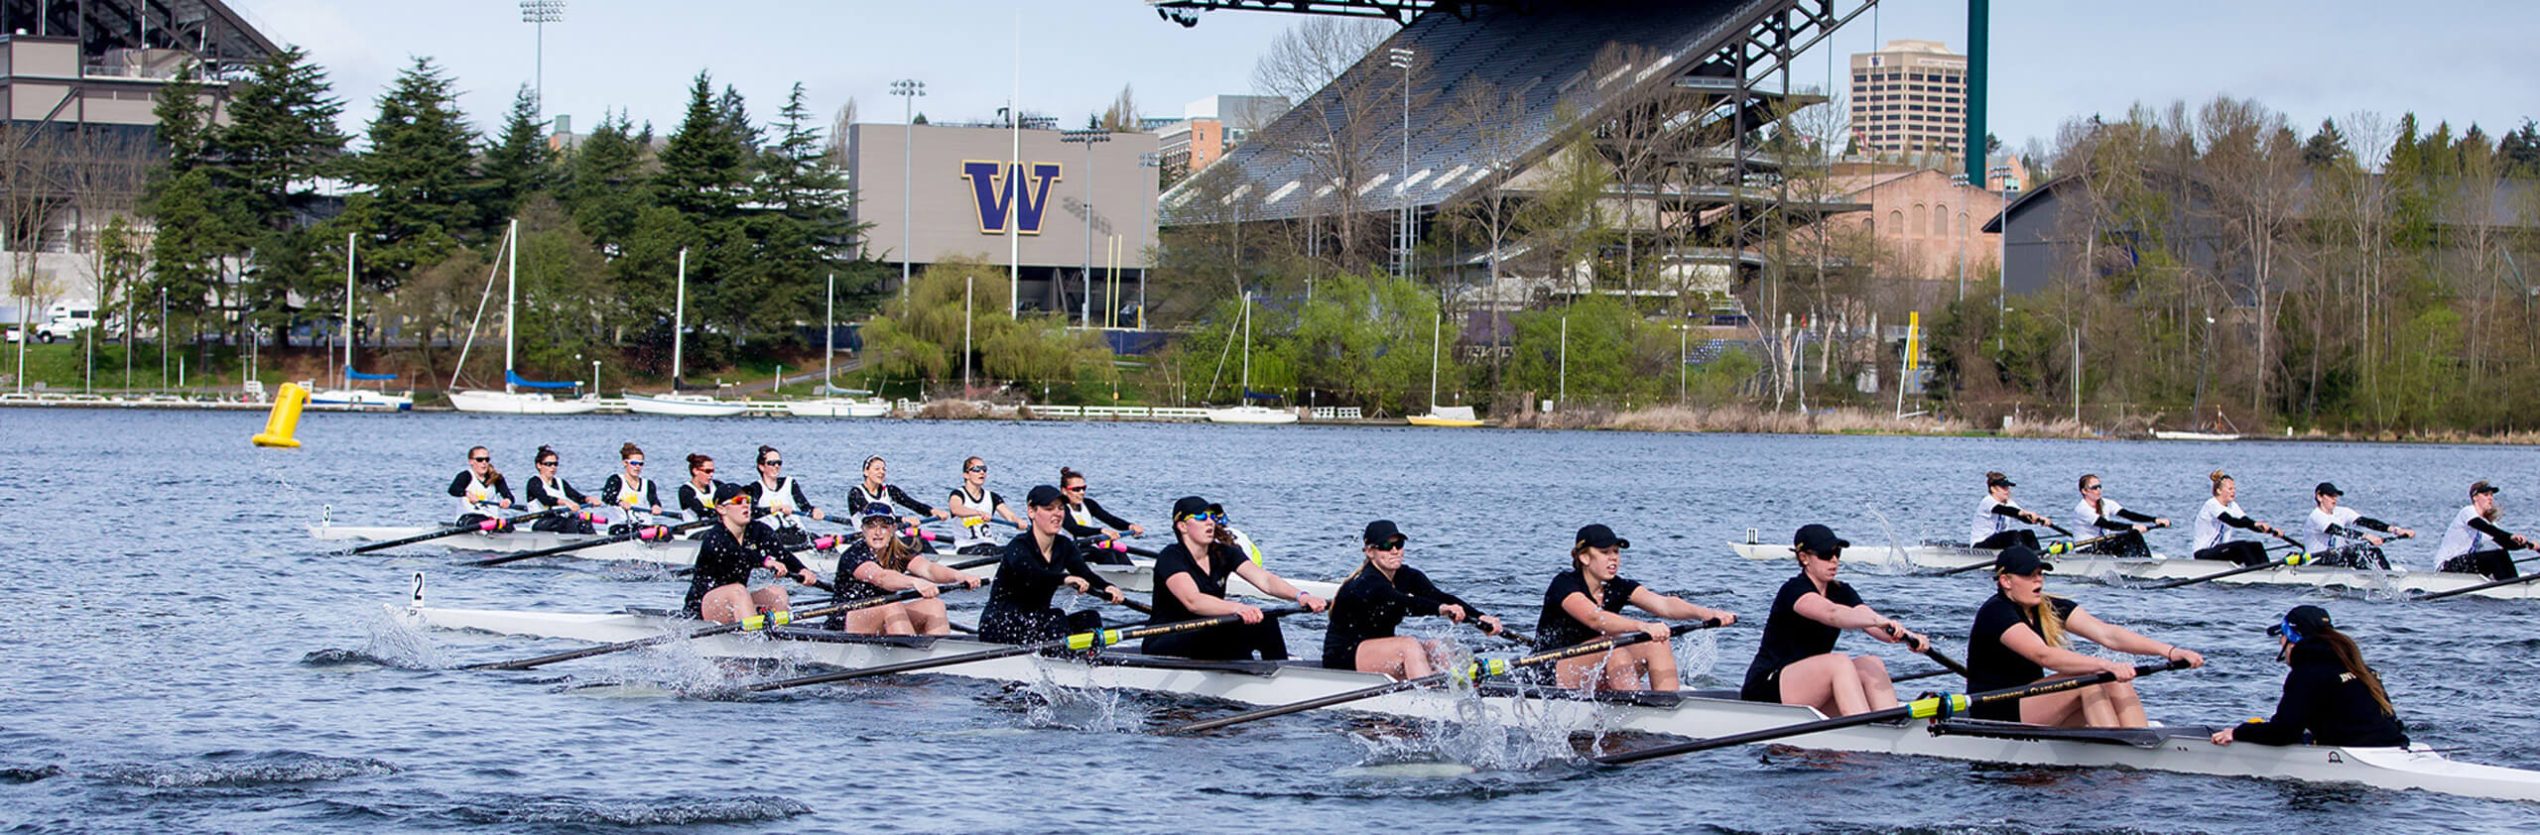 Washington Rowing